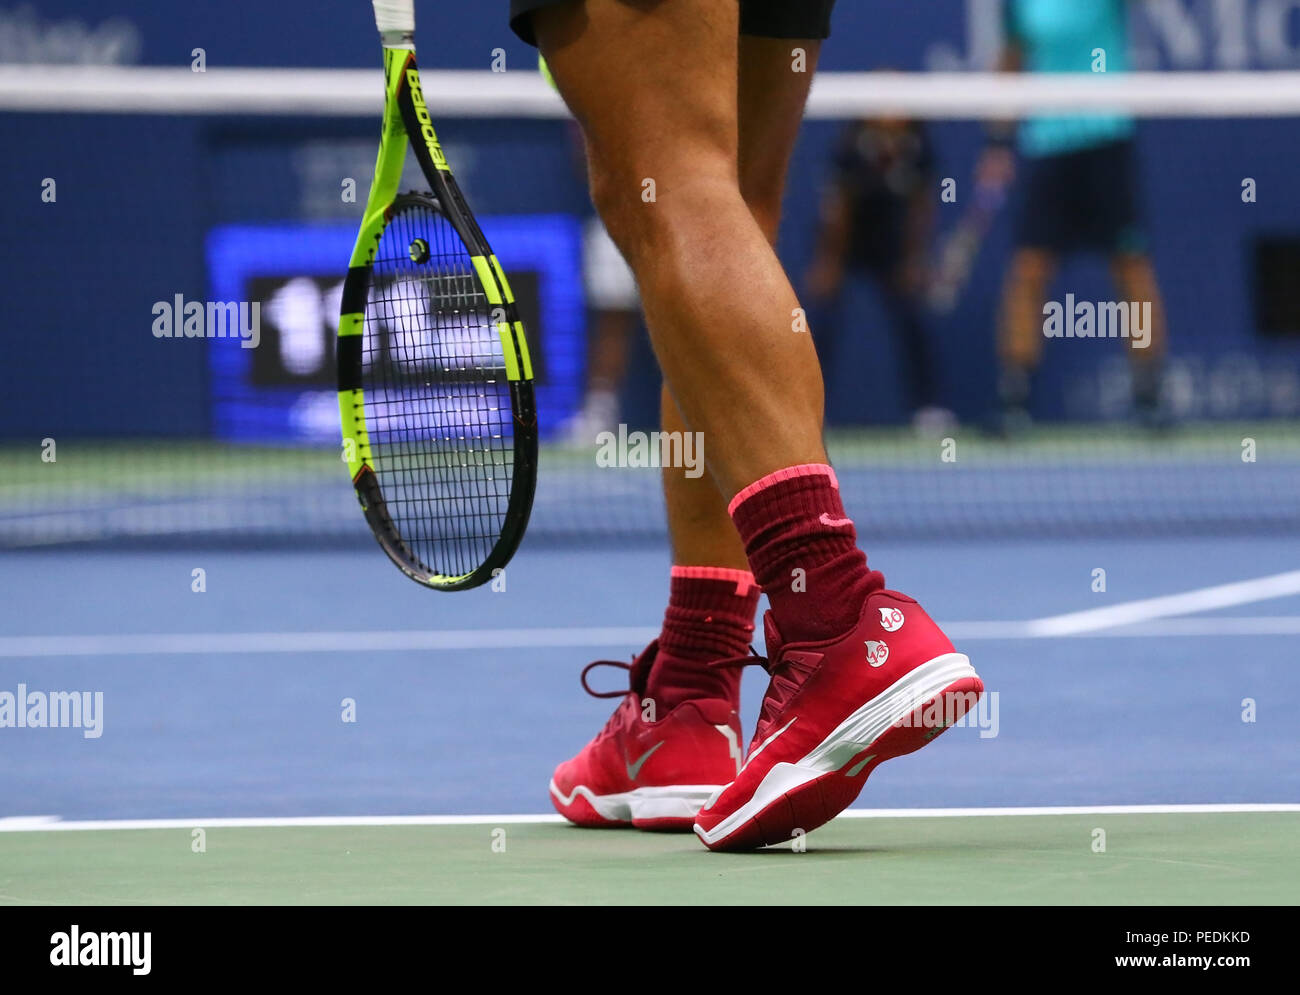 Chaussure De Tennis Nadal Deals, SAVE 60% - aveclumiere.com